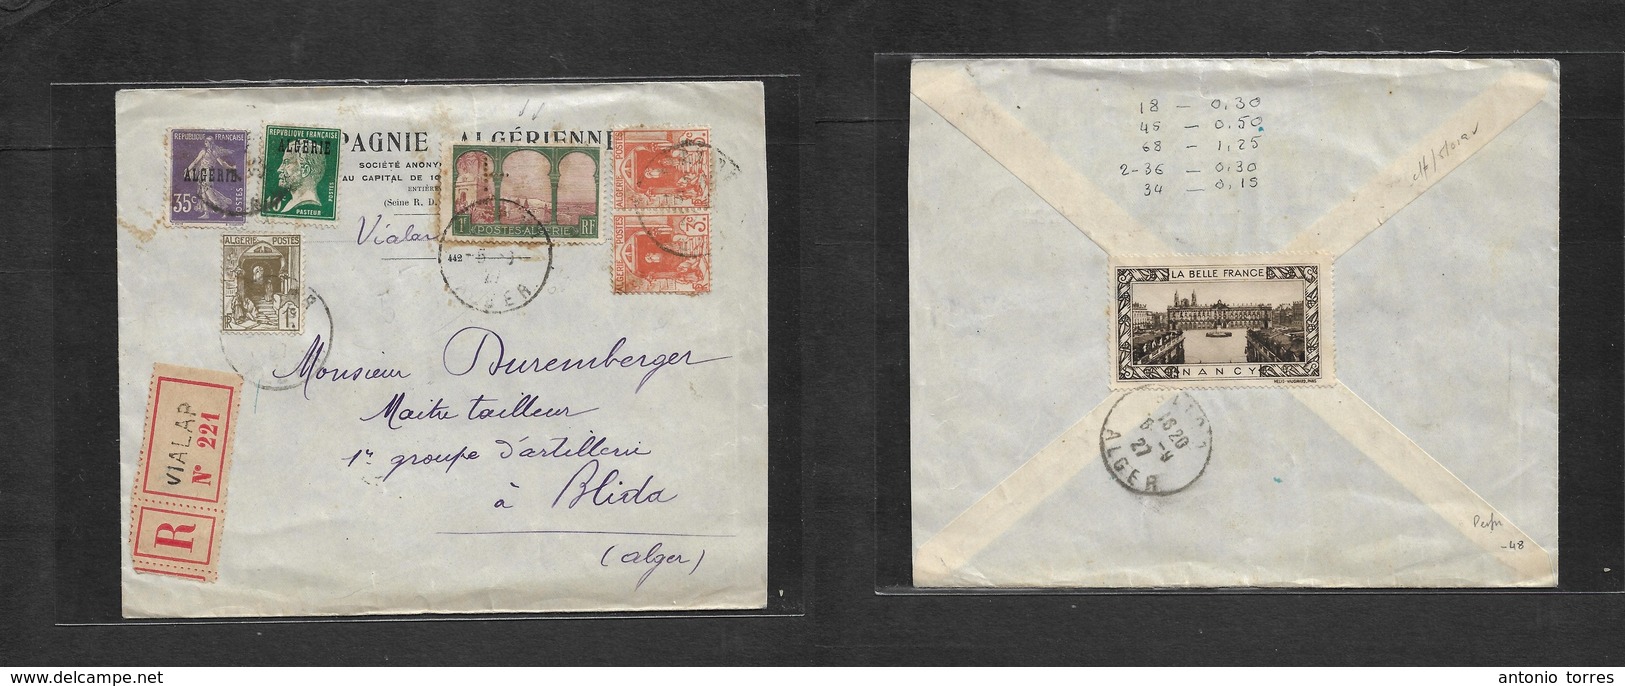 Algeria. 1927 (5 Sept)  Vialap - Blida. PERFIN Stamp Comercial Usage Ovptd Issue + Mixed. Registered Multifkd Envelope.  - Algeria (1962-...)